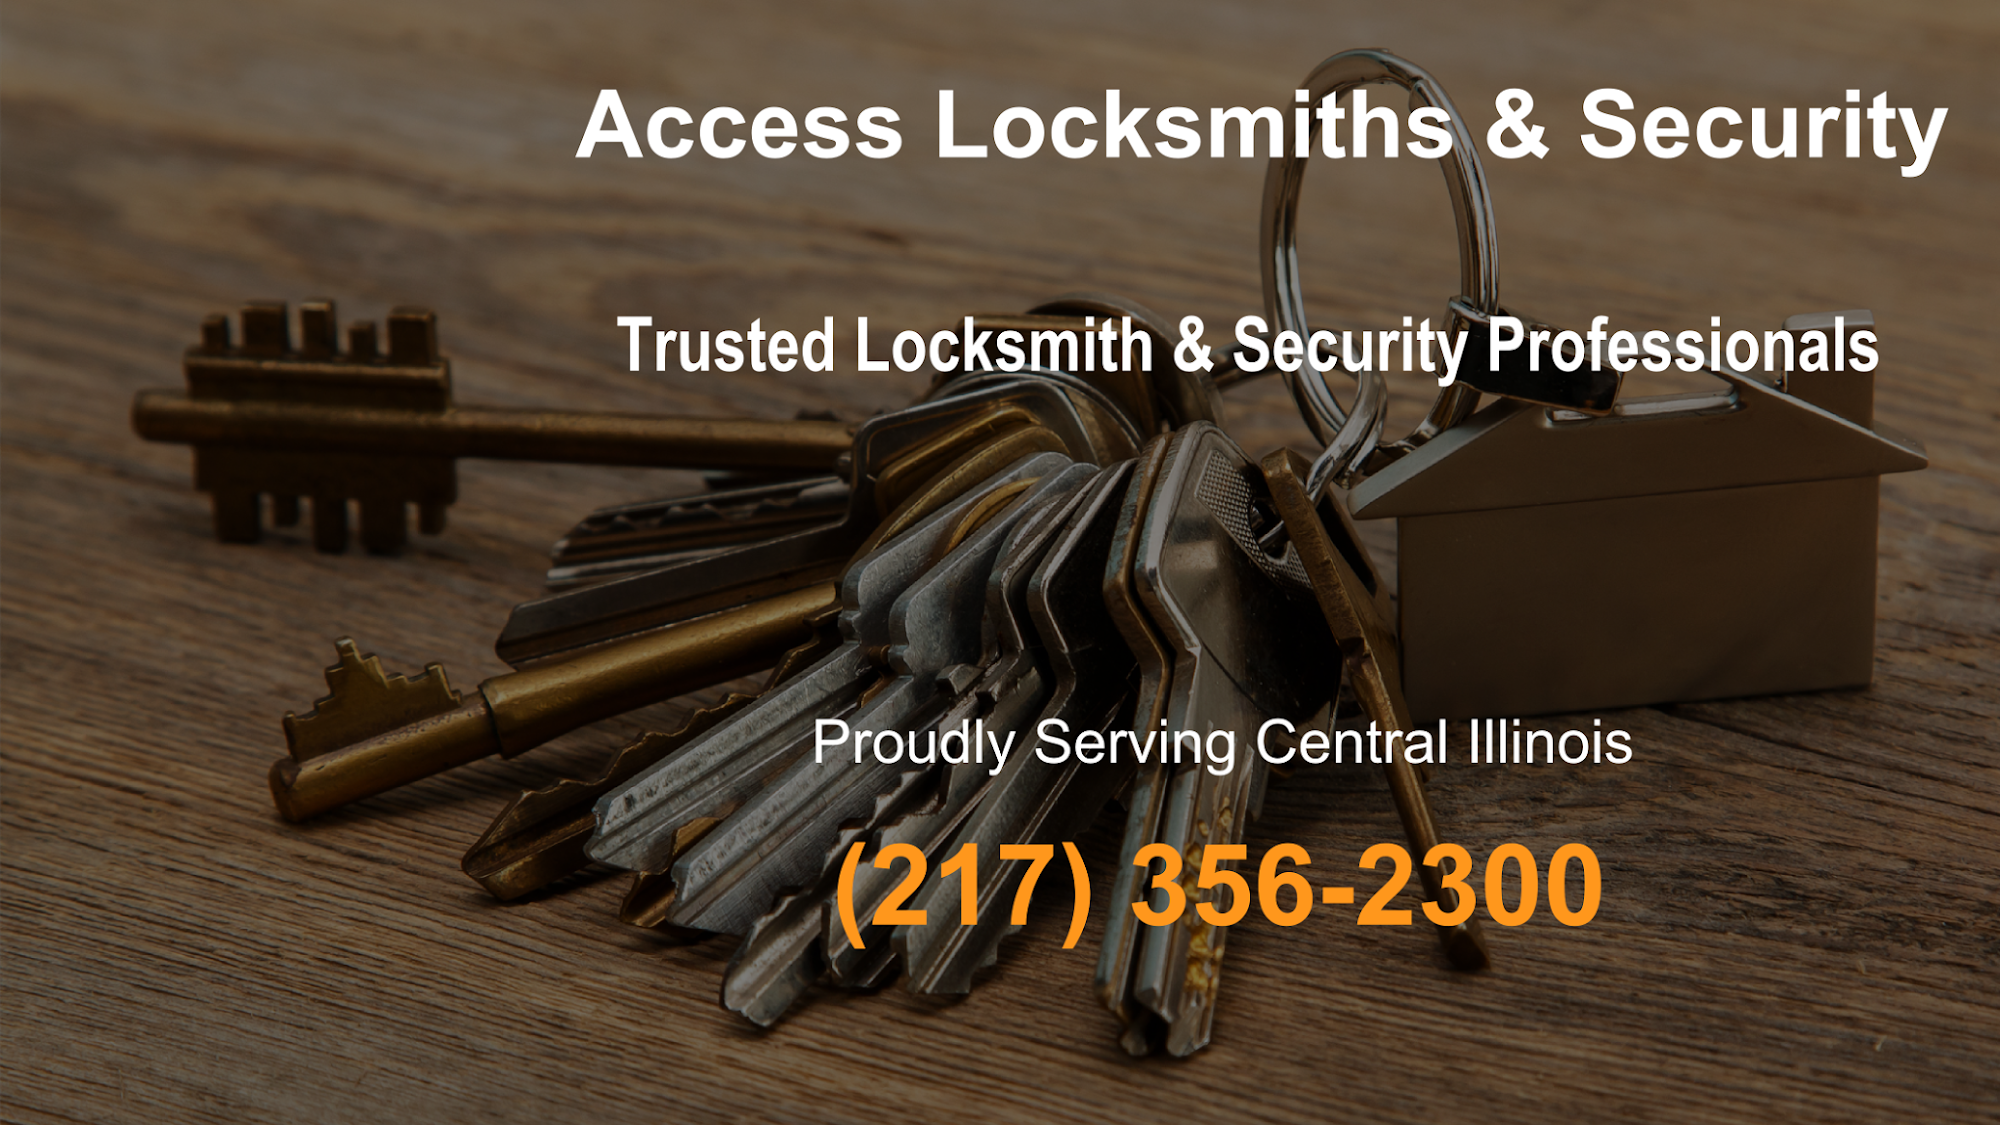 Access Locksmiths & Security